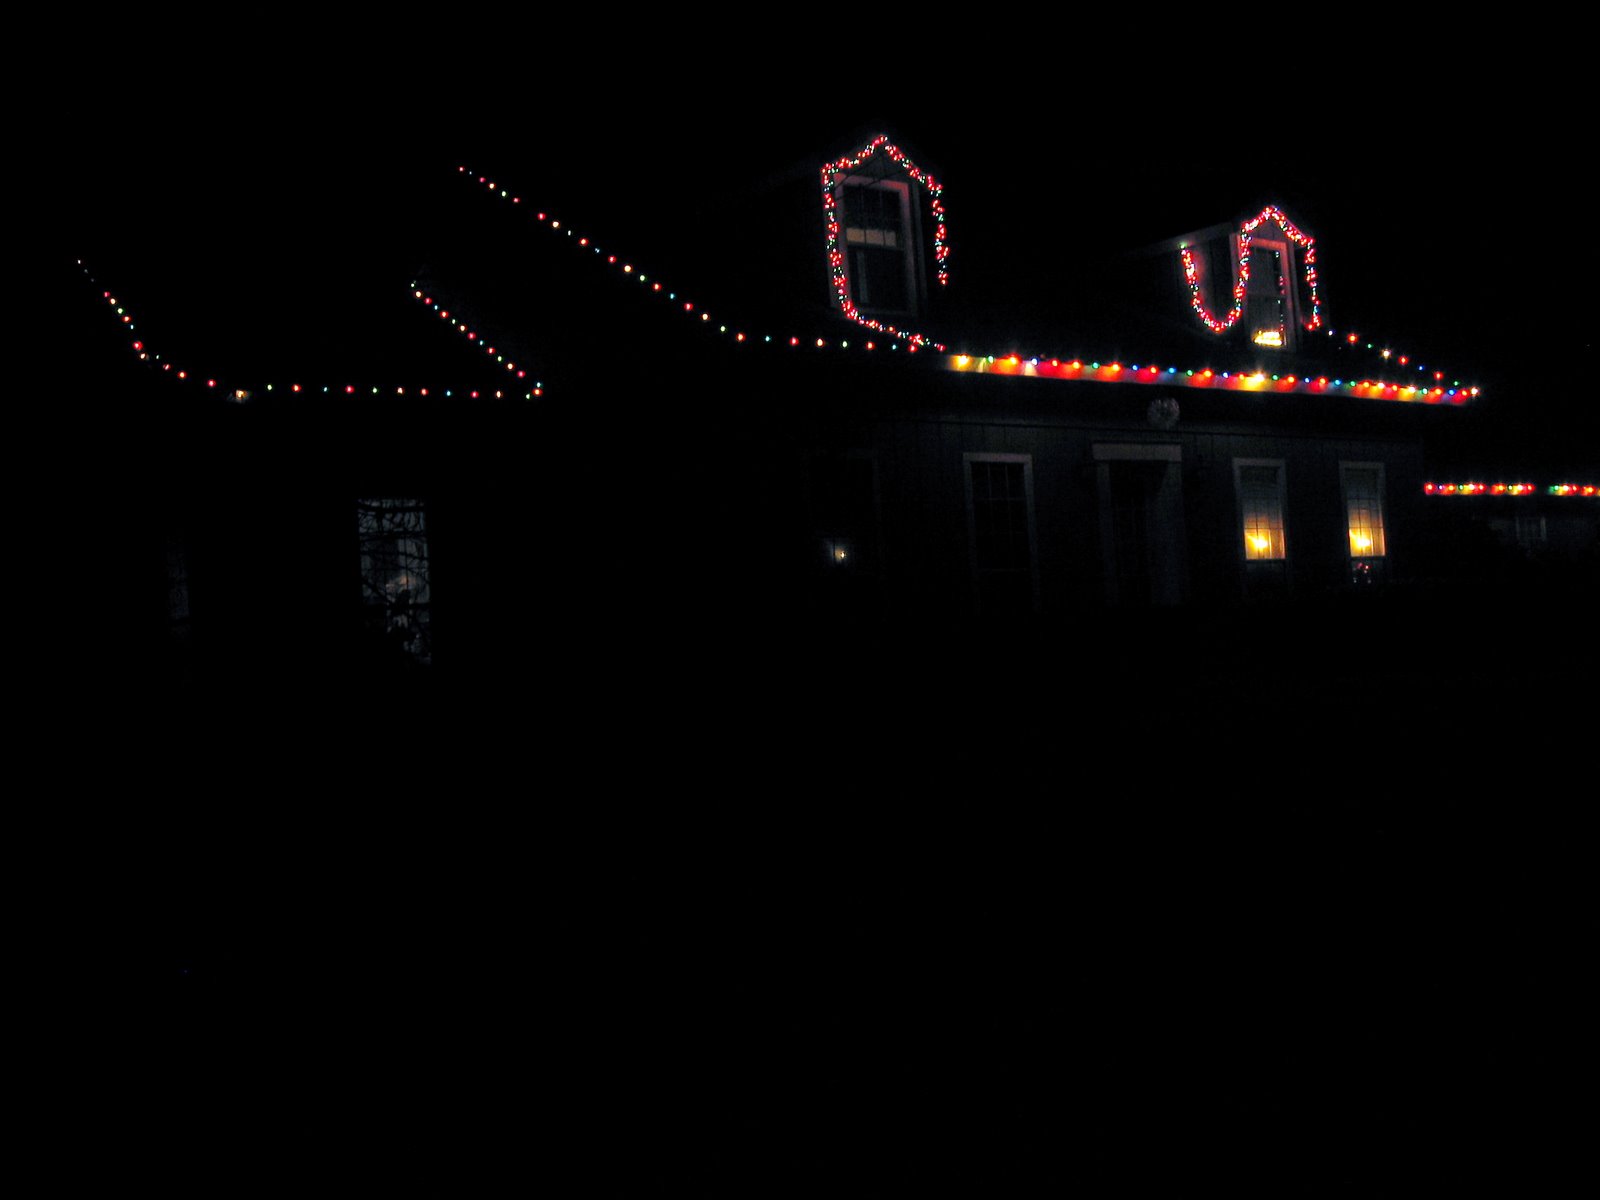 FAR Manor lit up for Christmas